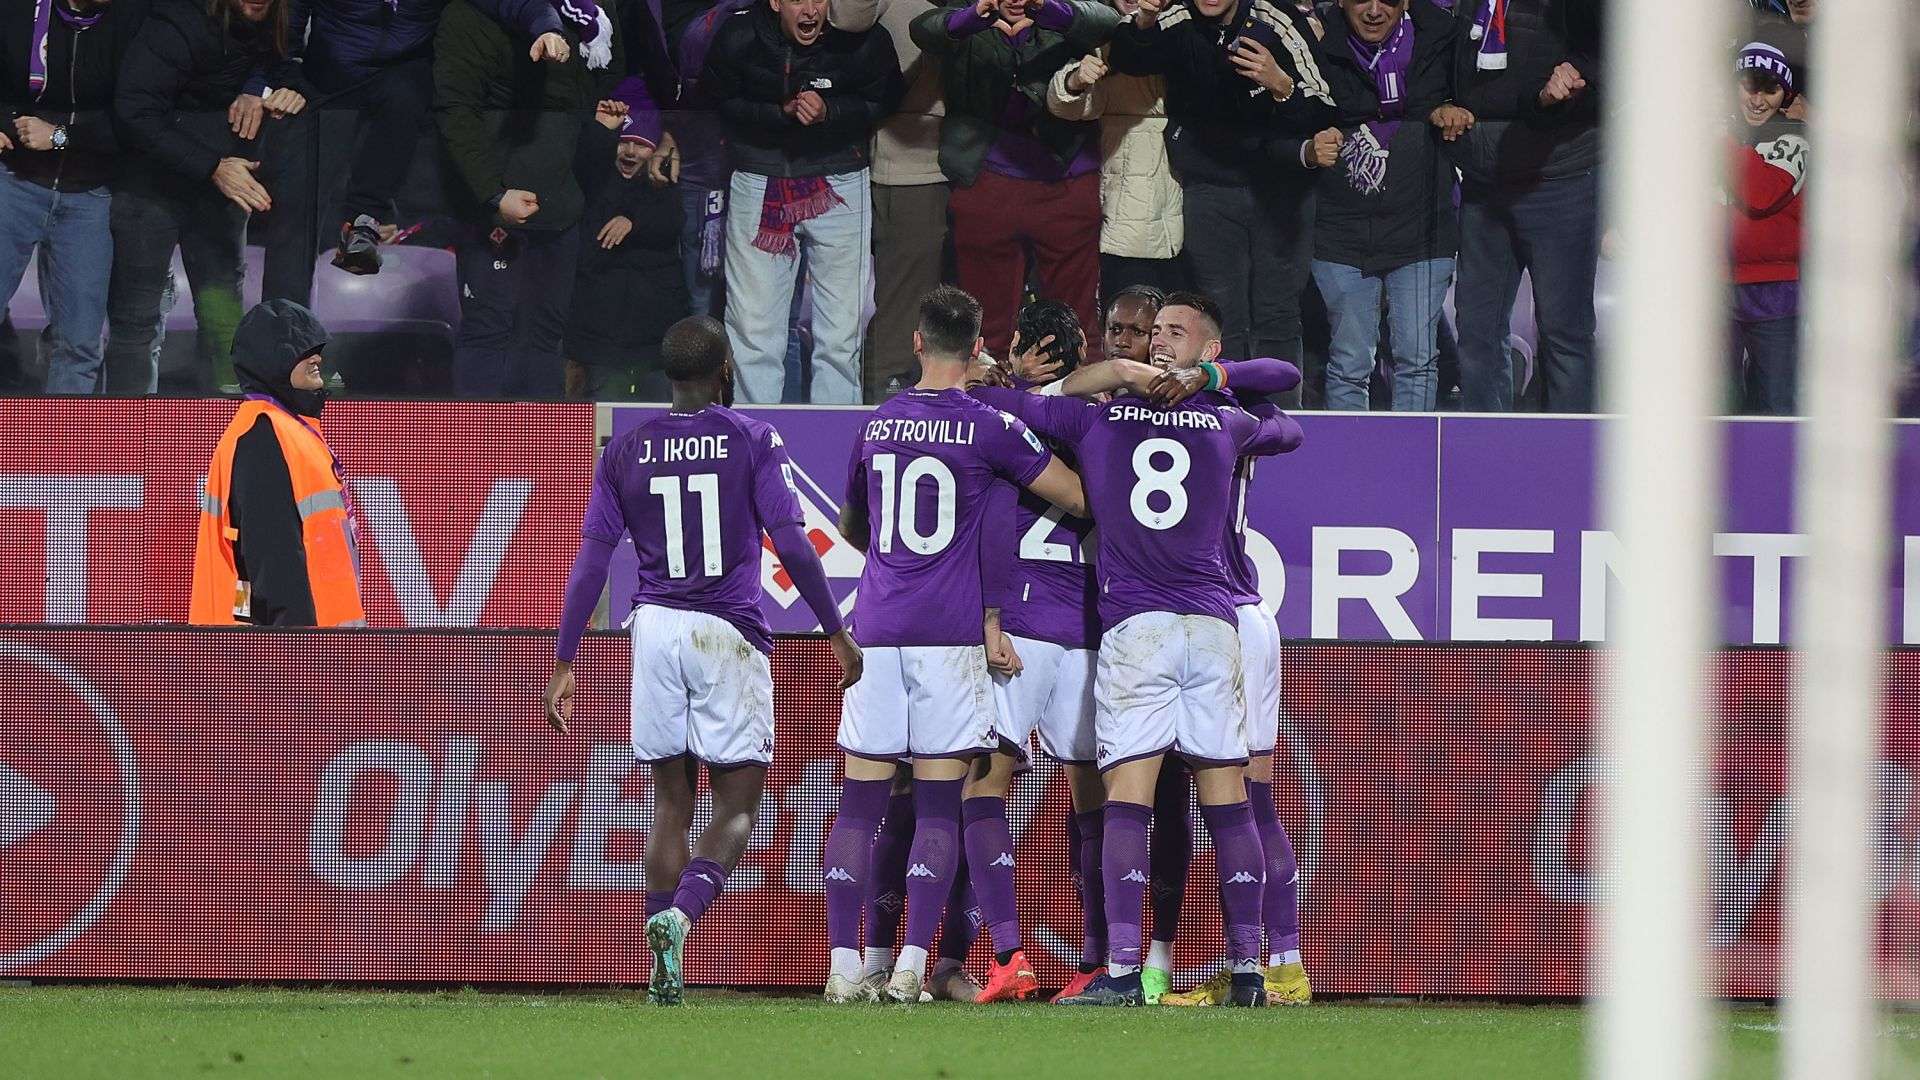 Fiorentina players celebrating